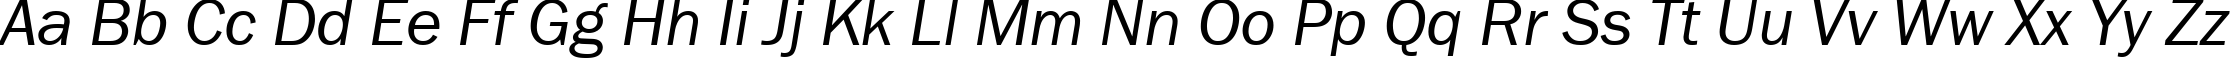 Пример написания английского алфавита шрифтом FranklinGothBookCTT Italic